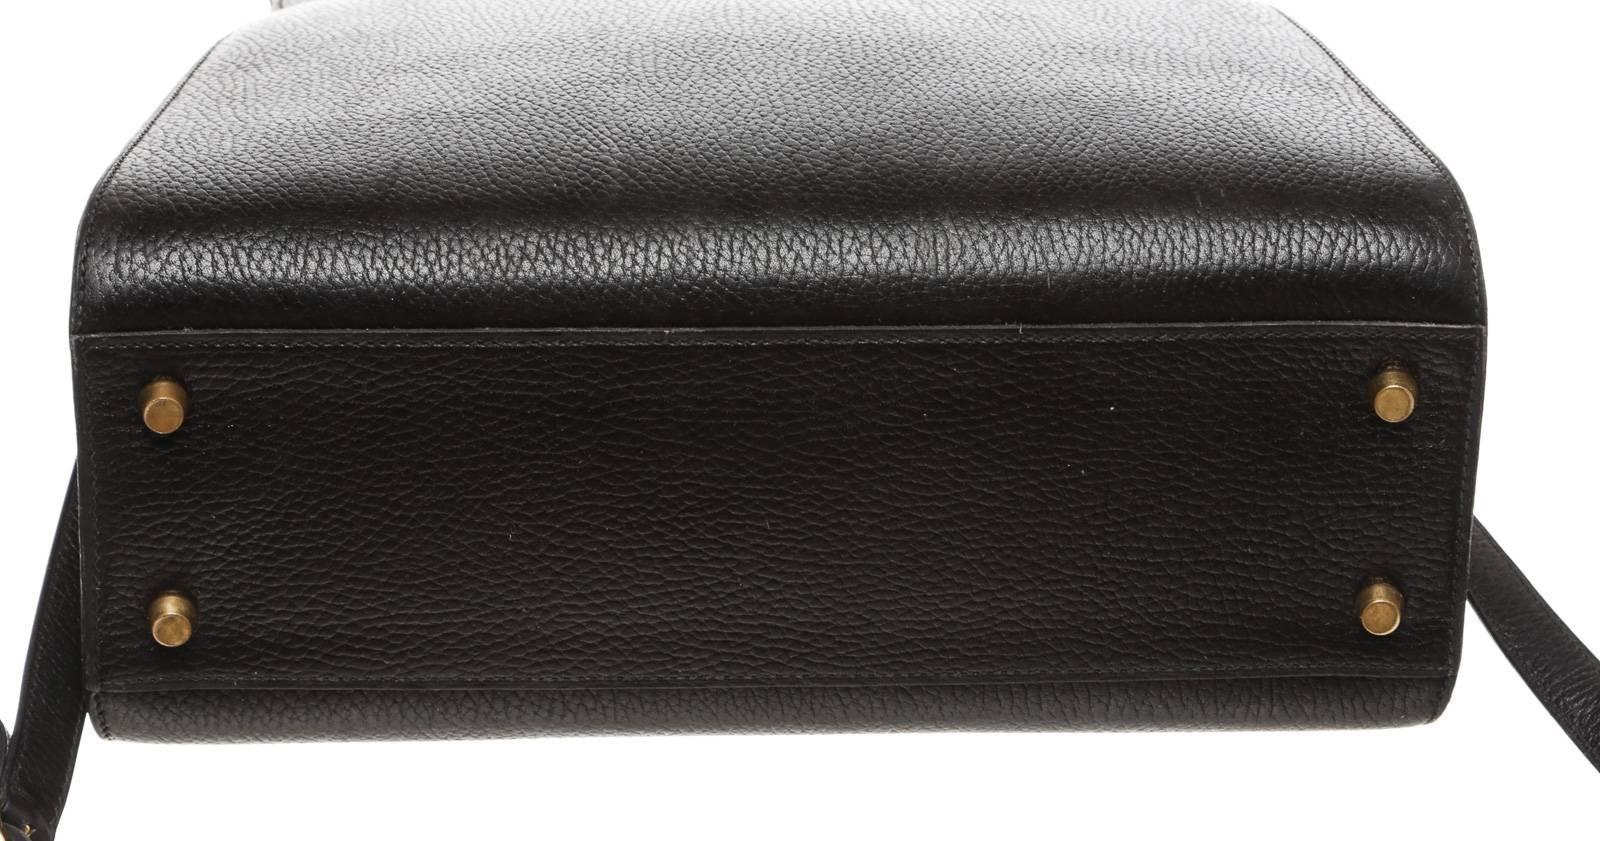 Hermes Black Togo Leather So Kelly Shoulder Handbag In Good Condition For Sale In Corona Del Mar, CA